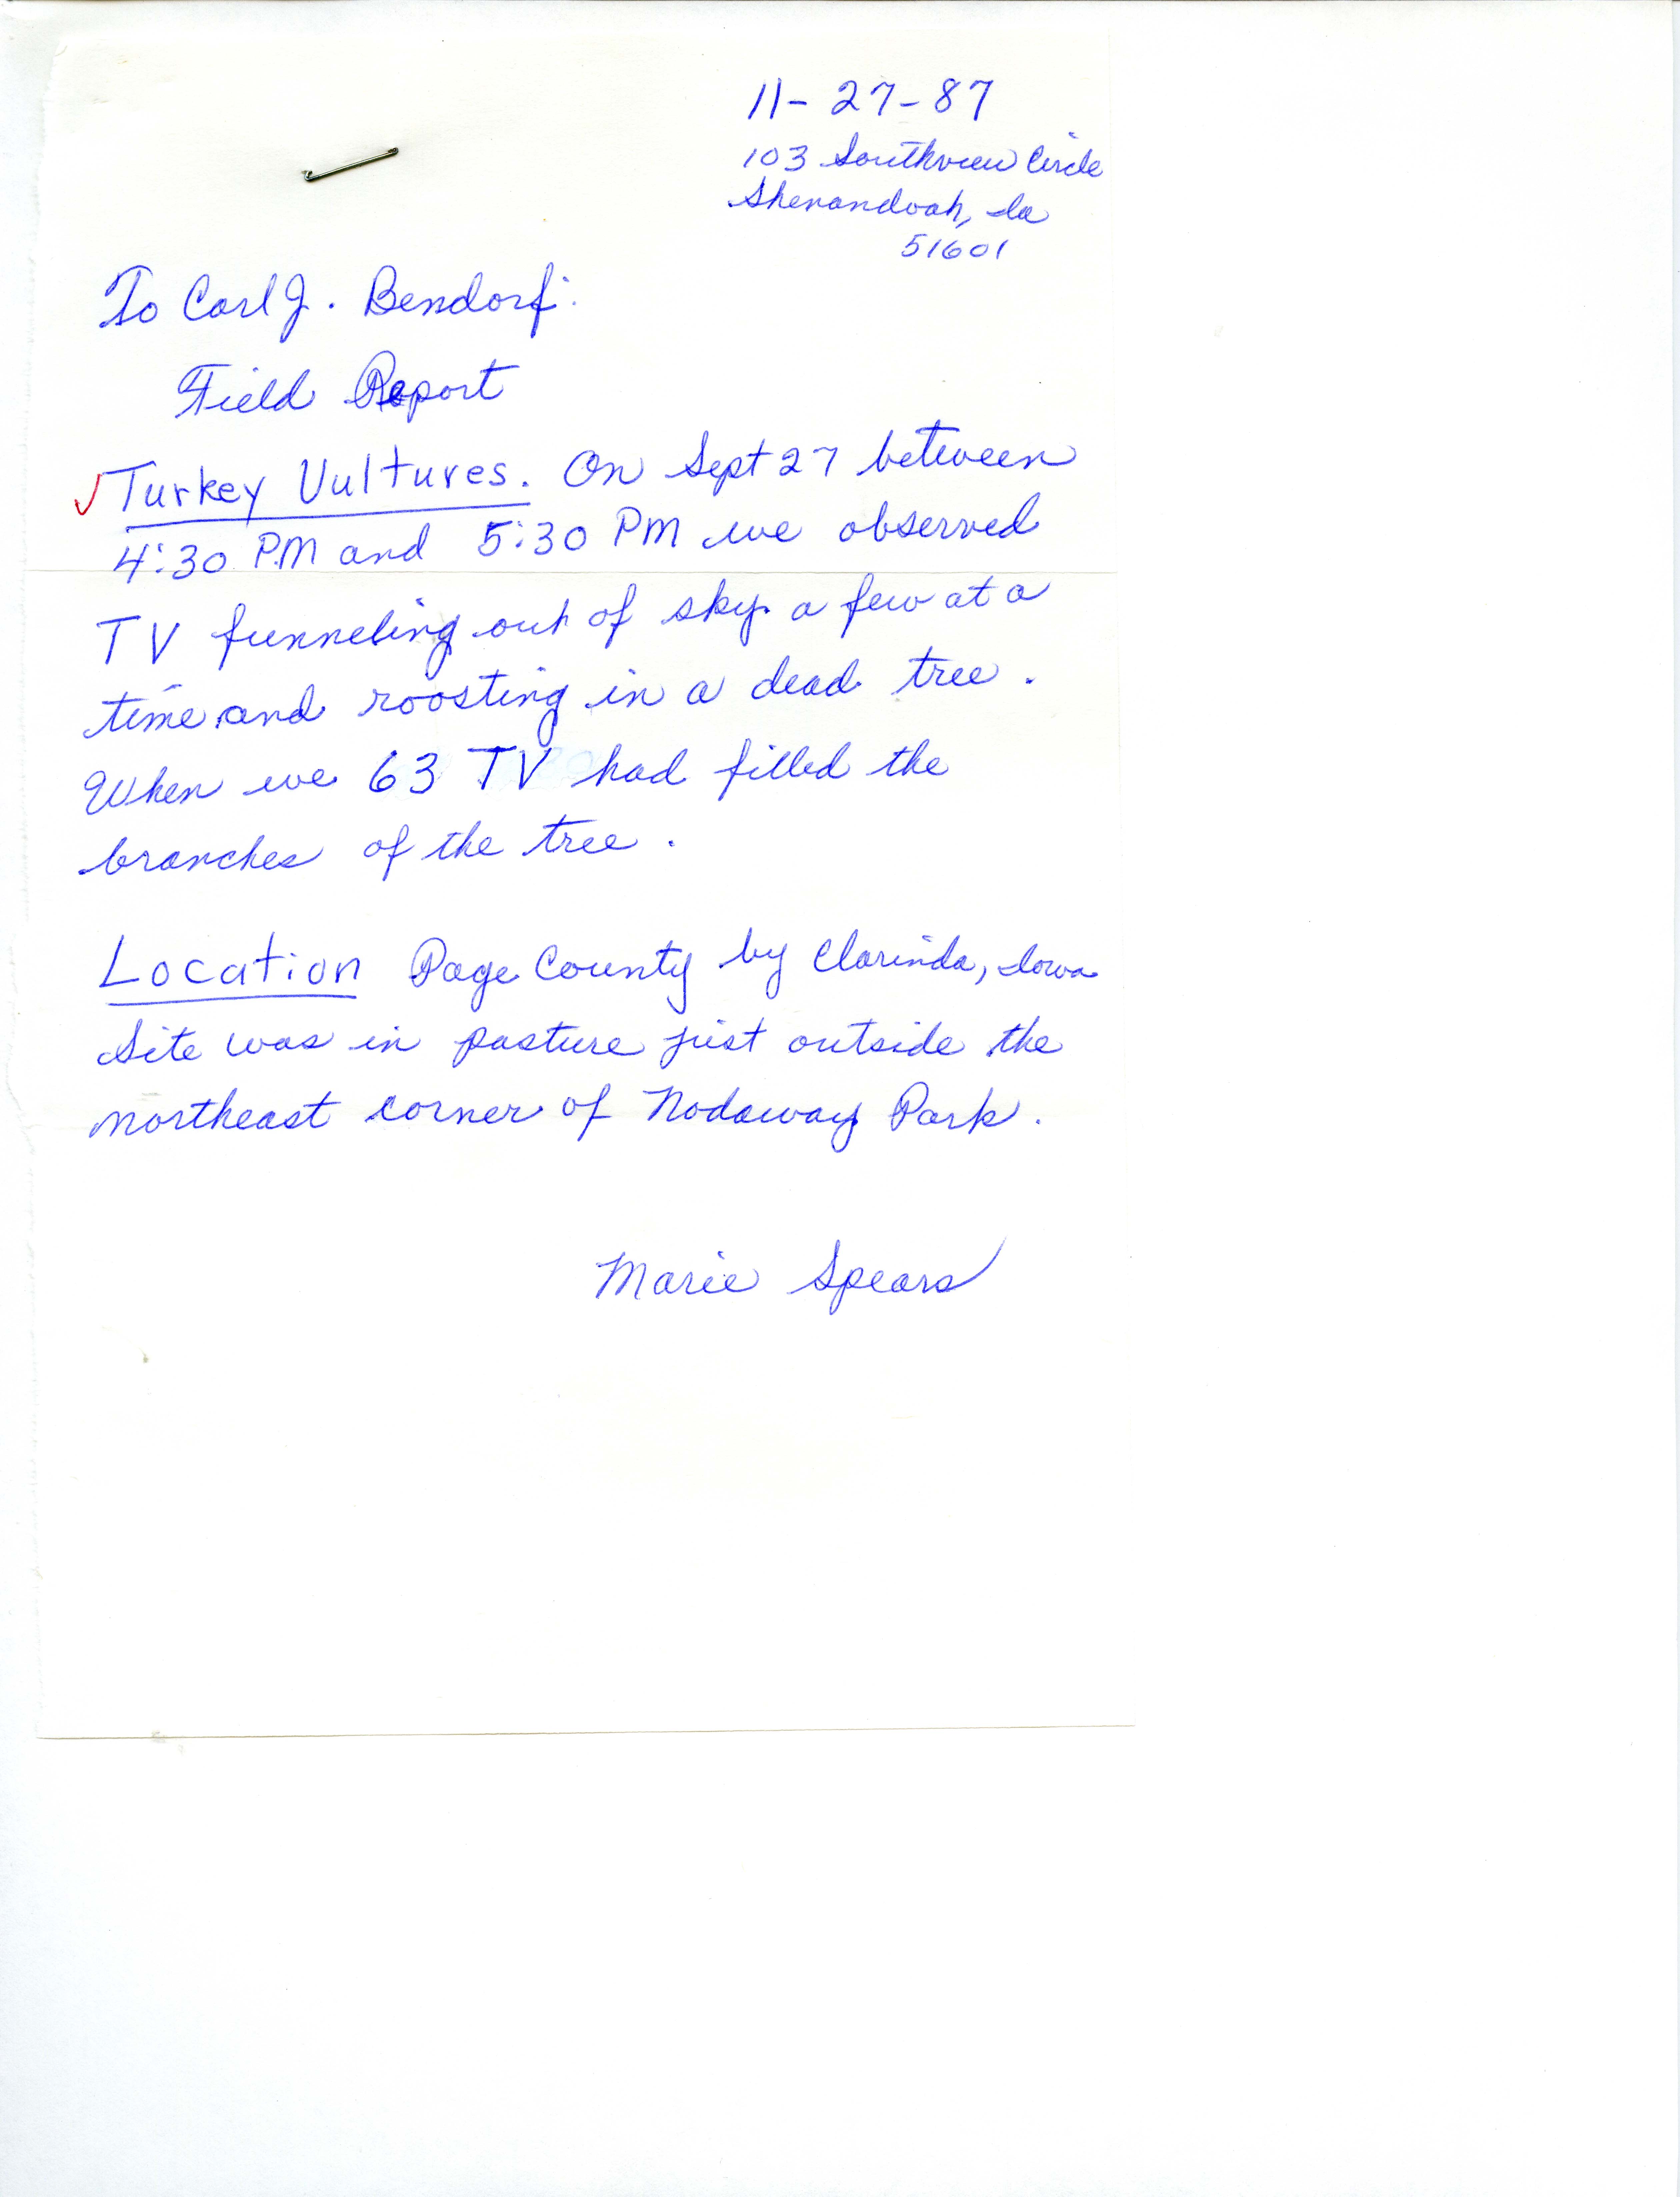 Marie E. Spears Tiemann letter to Carl J. Bendorf regarding a Turkey Vulture sighting, November 27, 1987